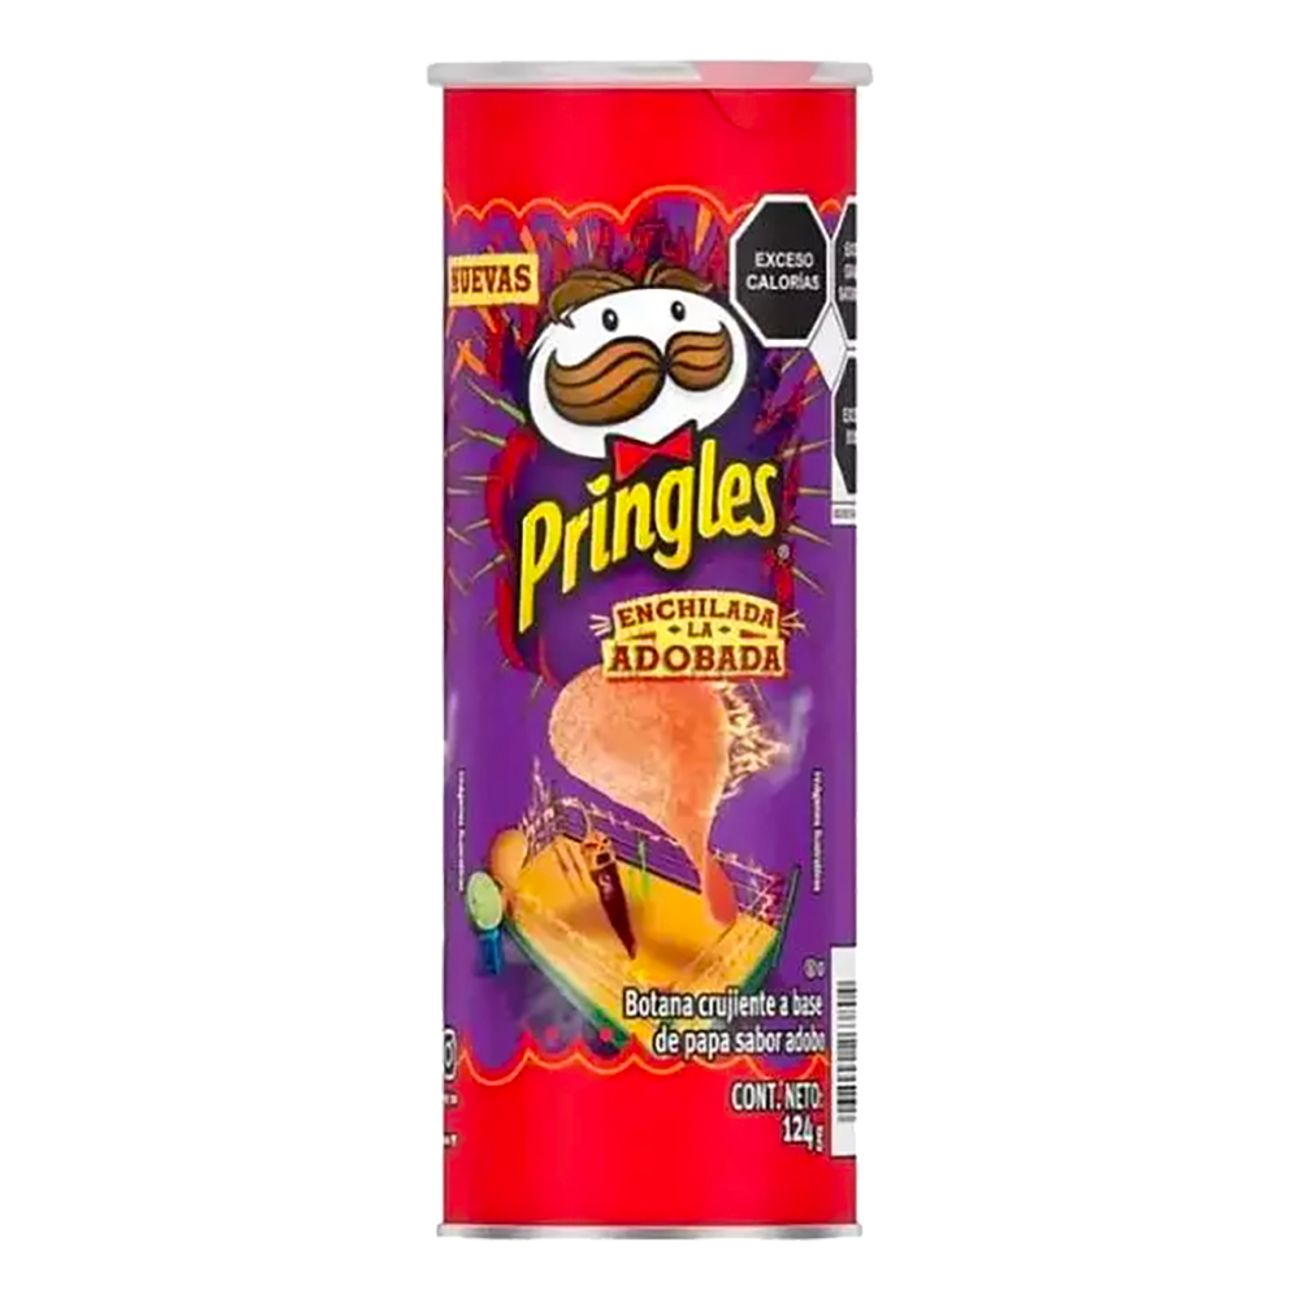 pringles-enchilada-adobada-mex-edition-97412-2